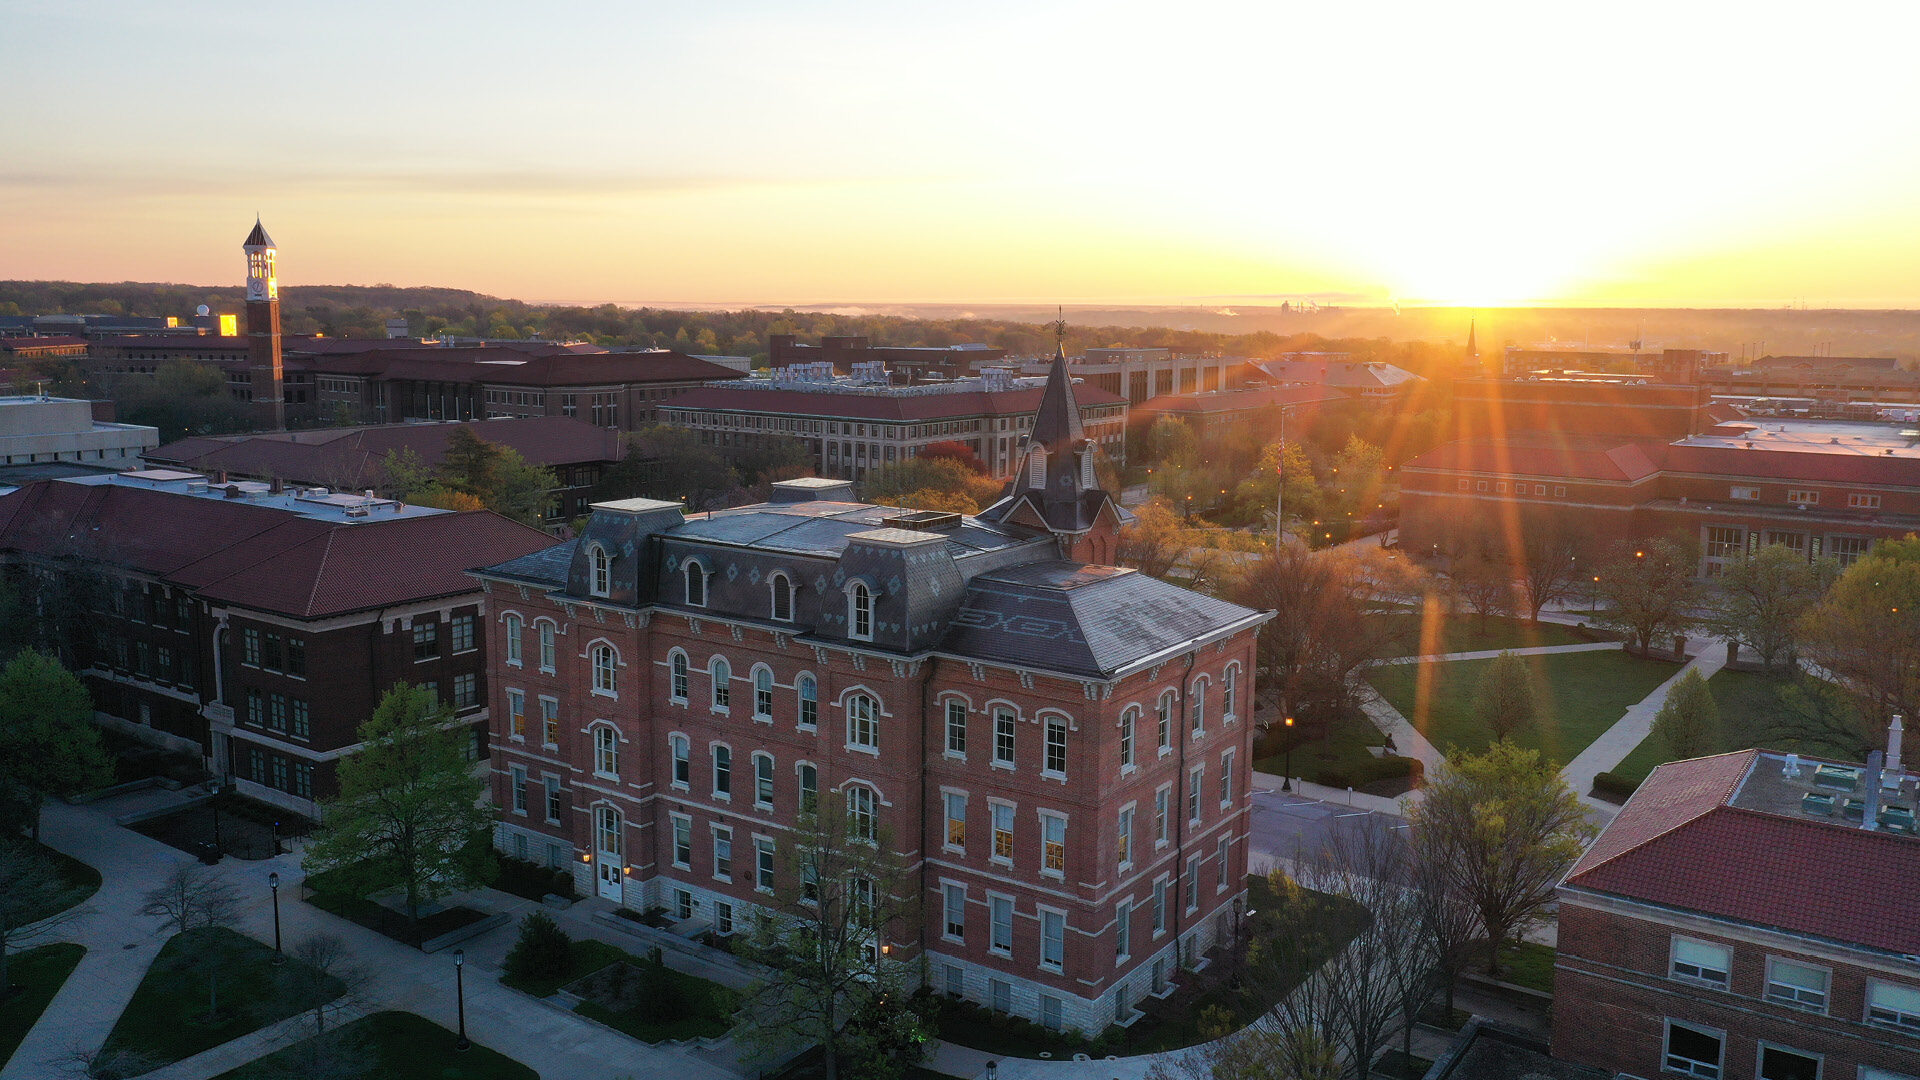 University Hall on the Purdue University campus.